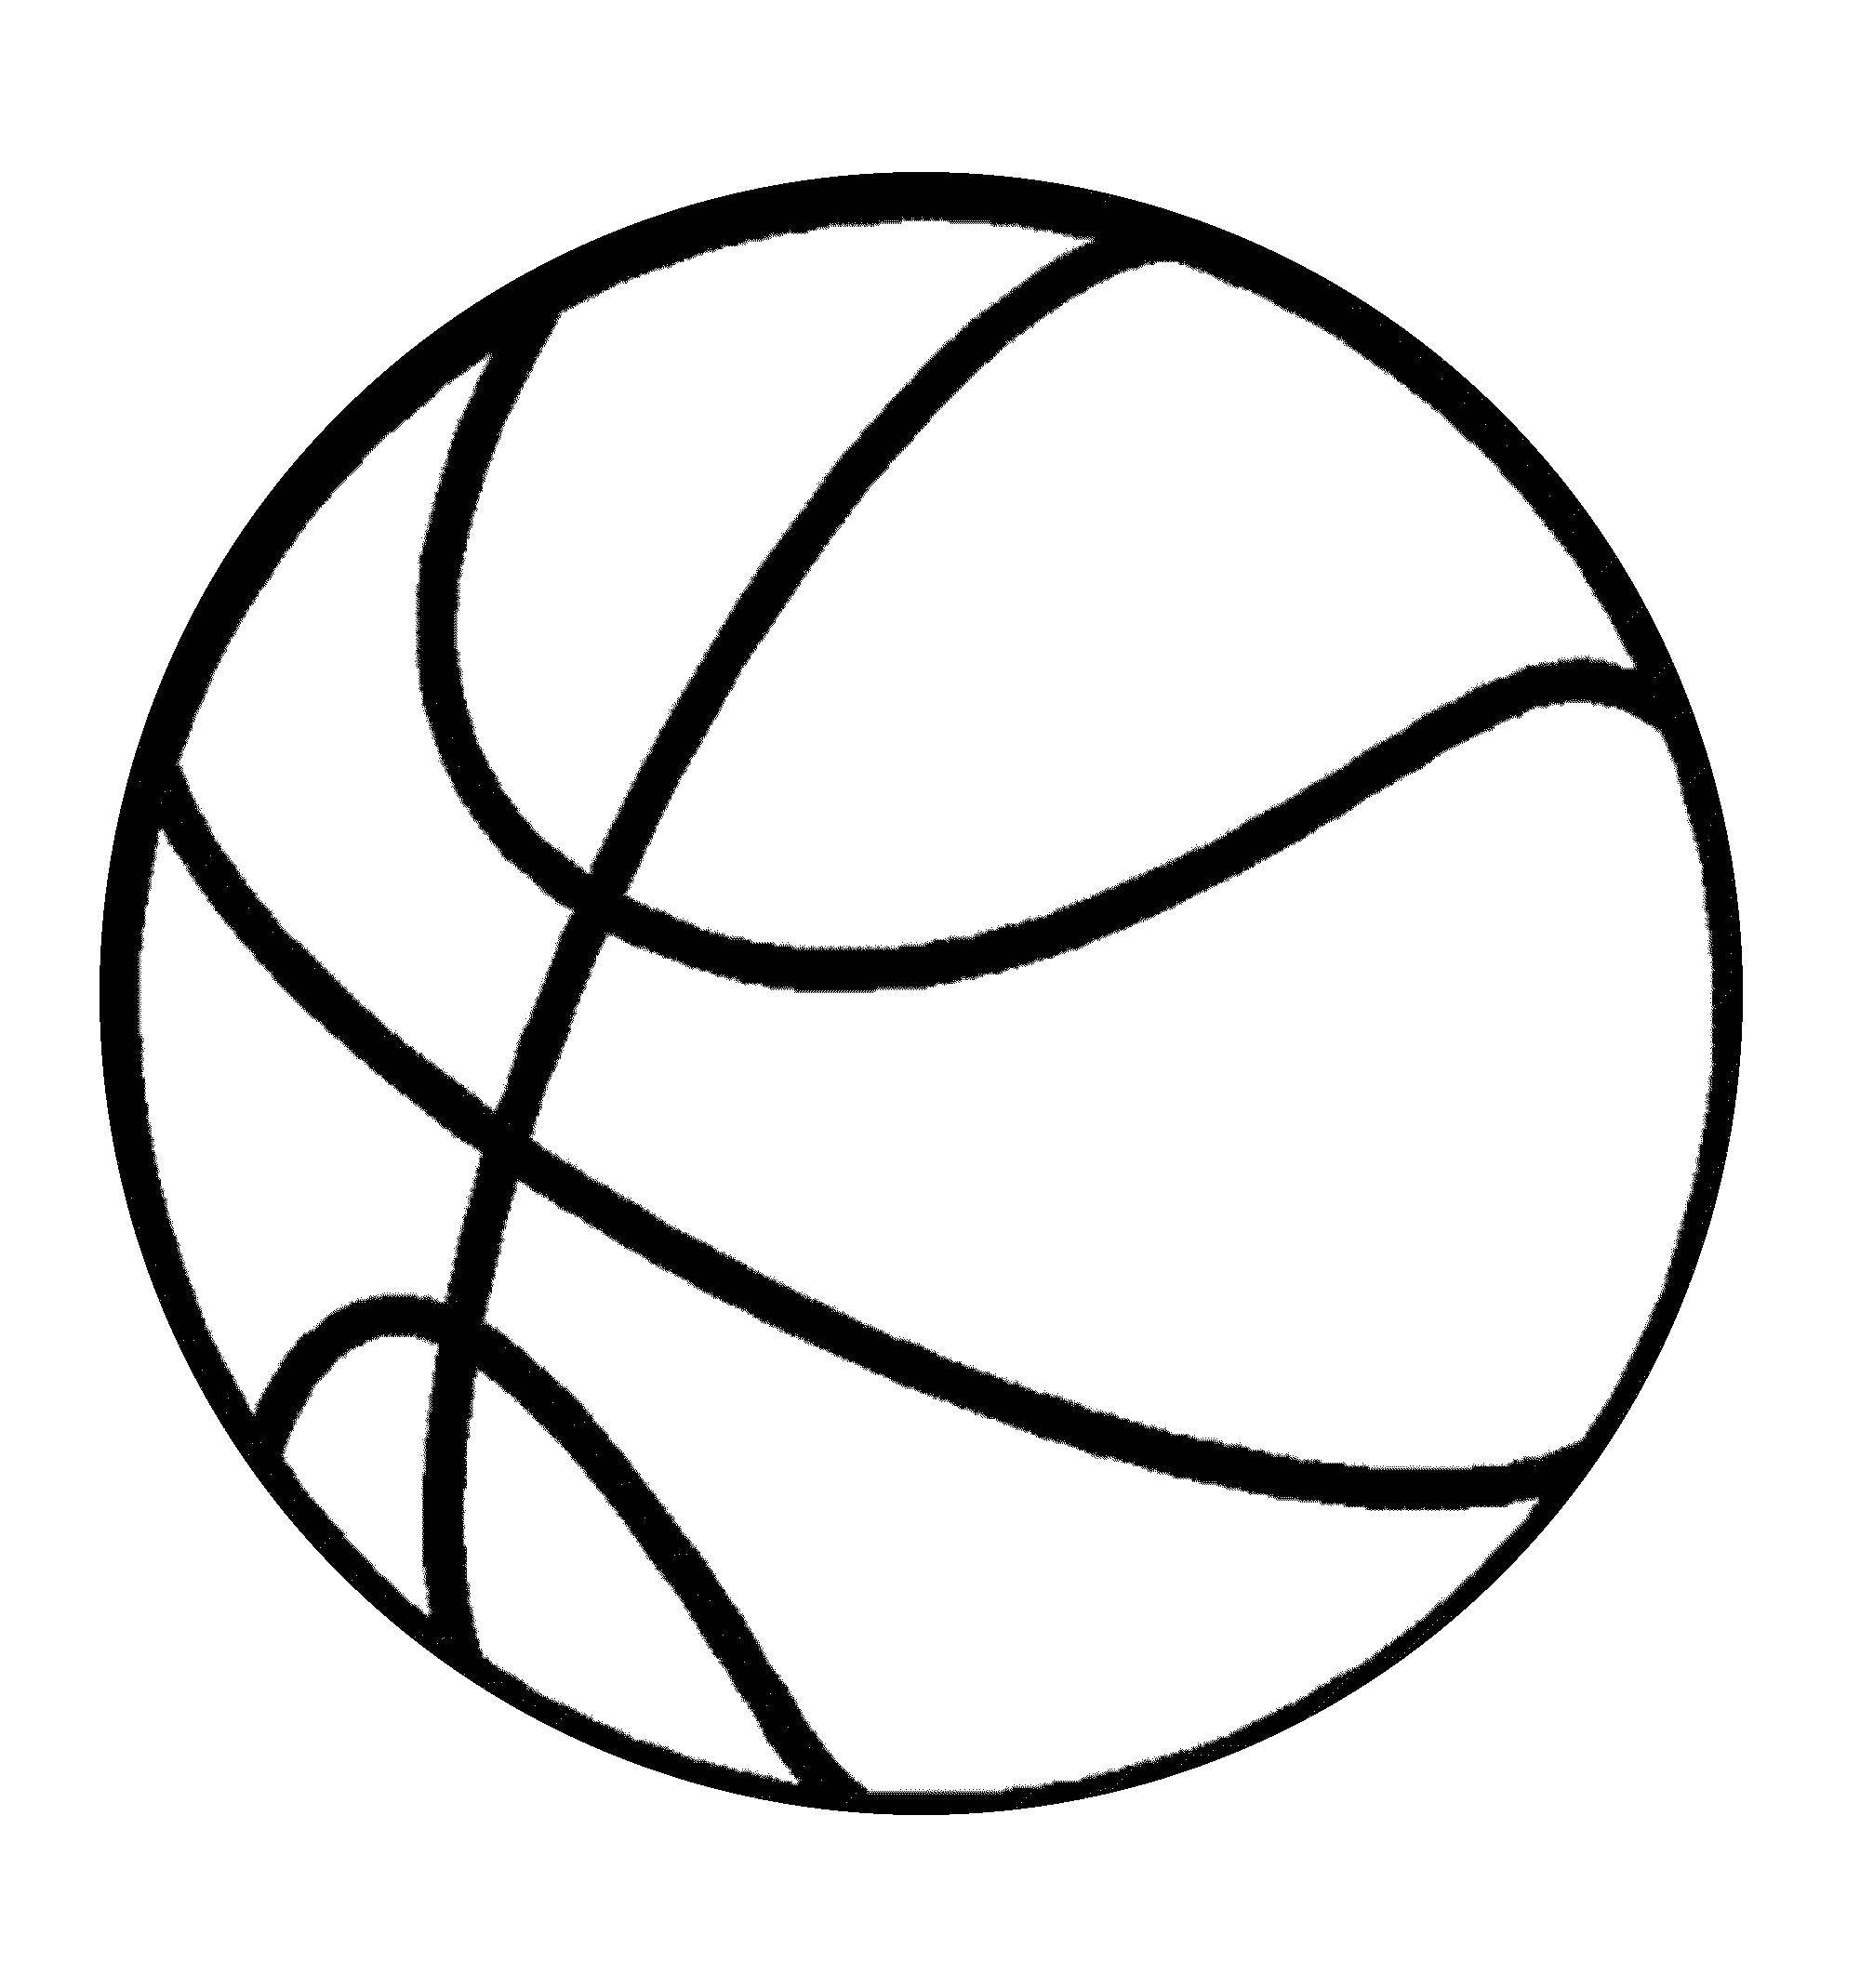 Название: Раскраска Мячик, баскетбол. Категория: баскетбол. Теги: Спорт, баскетбол, мяч, игра.